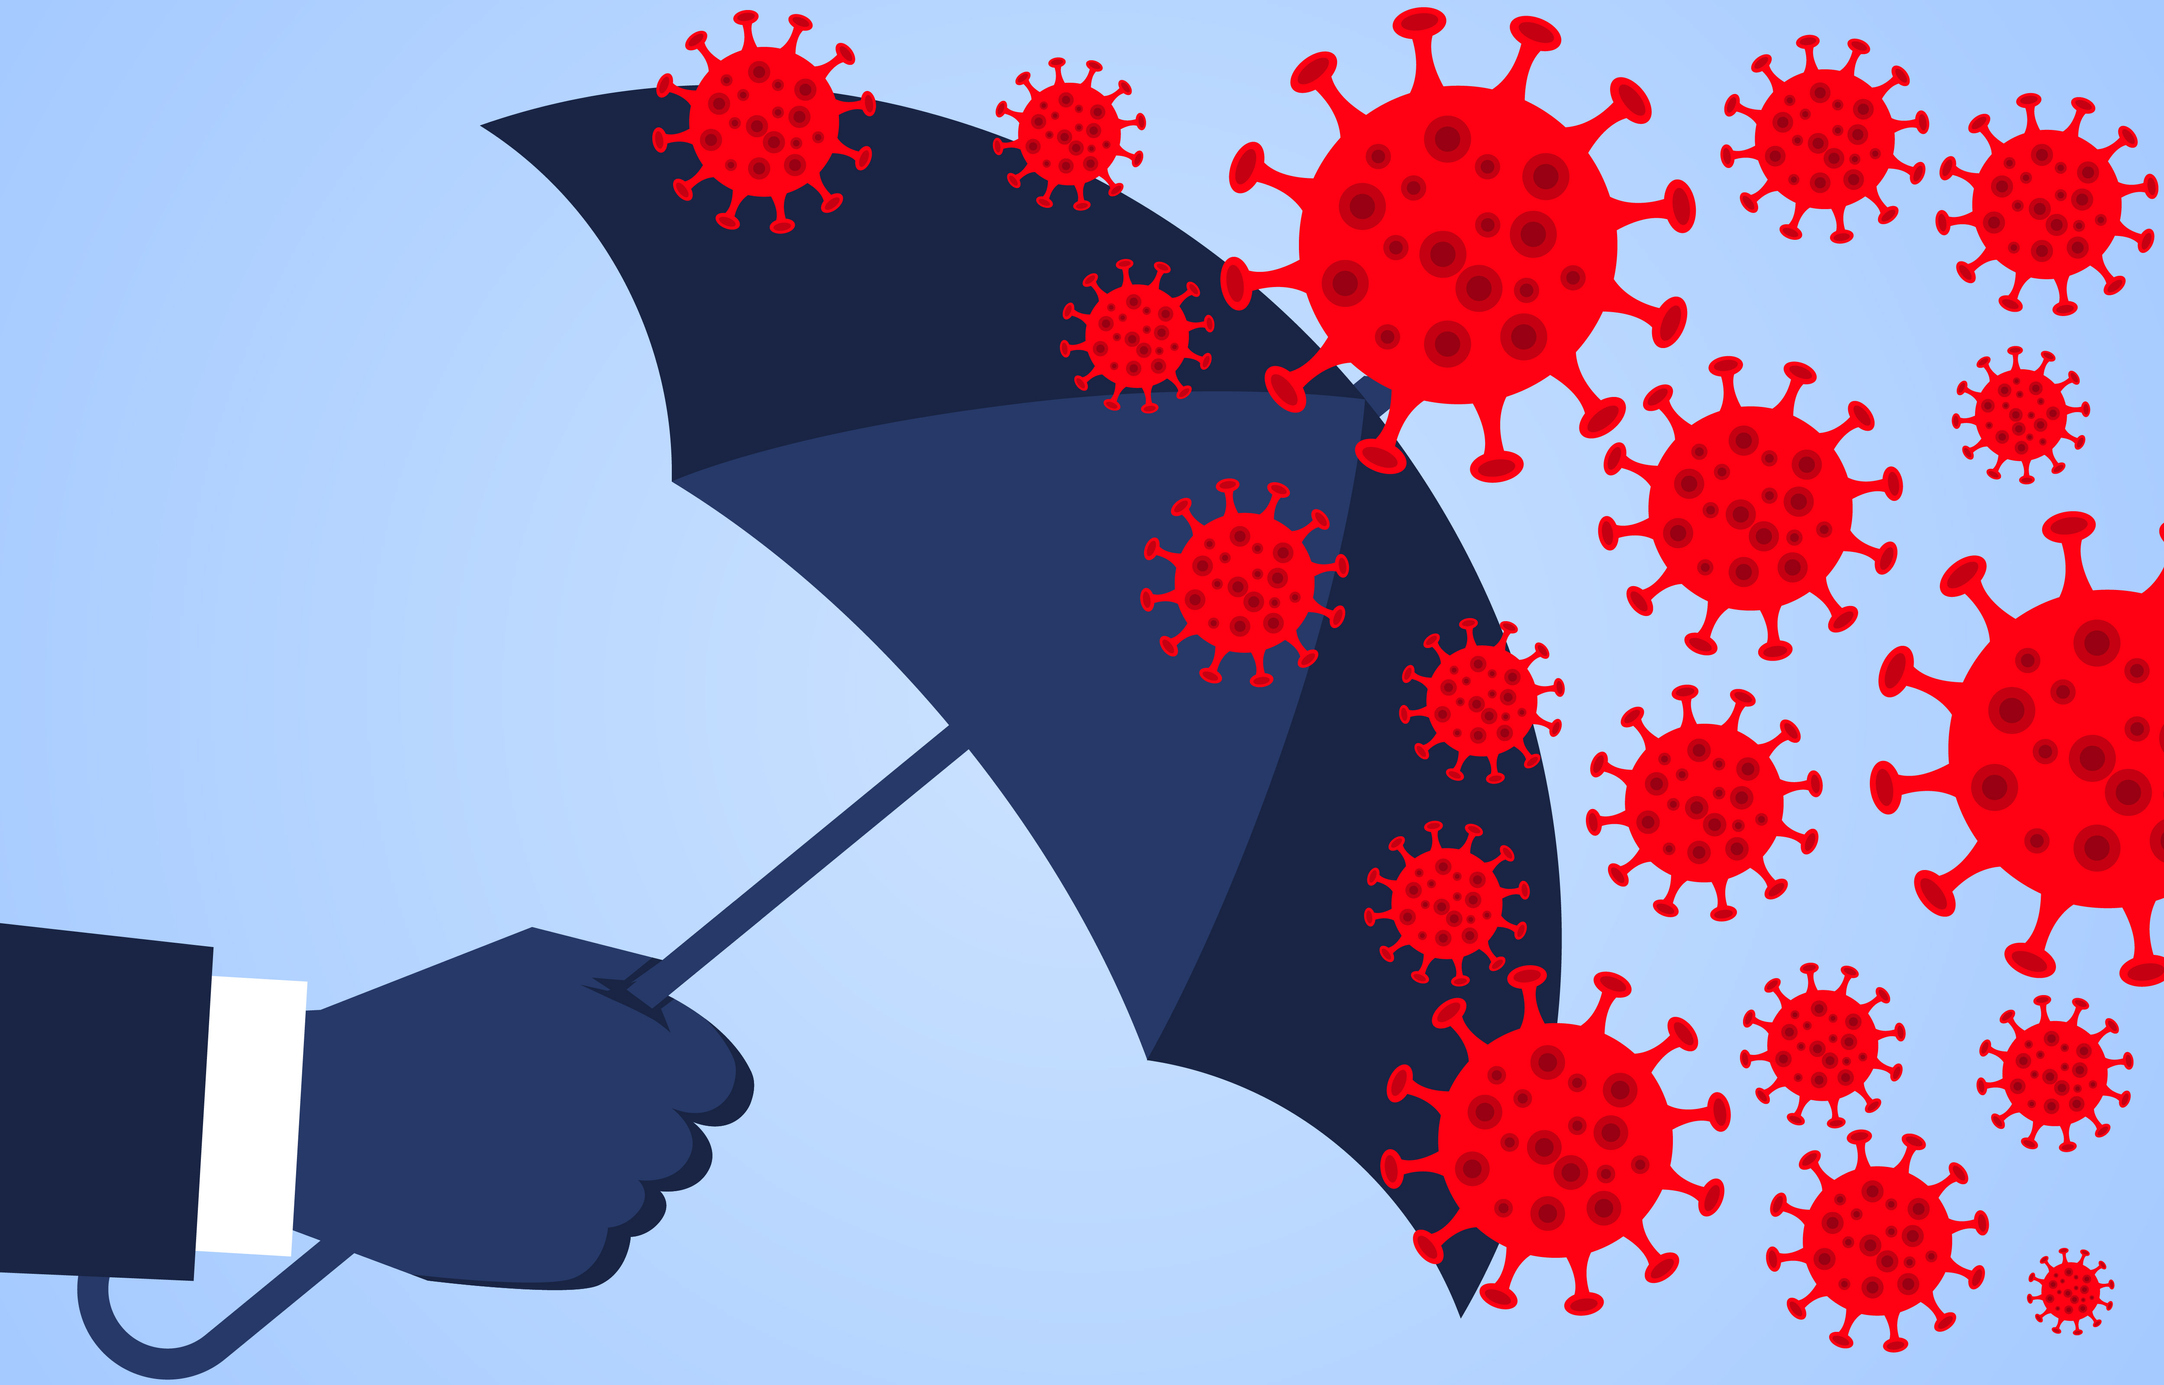 hand-holding-an-umbrella-against-the-2019-novel-coronavirus-pneumonia-global-plague-virus-1209212639_2168x1388